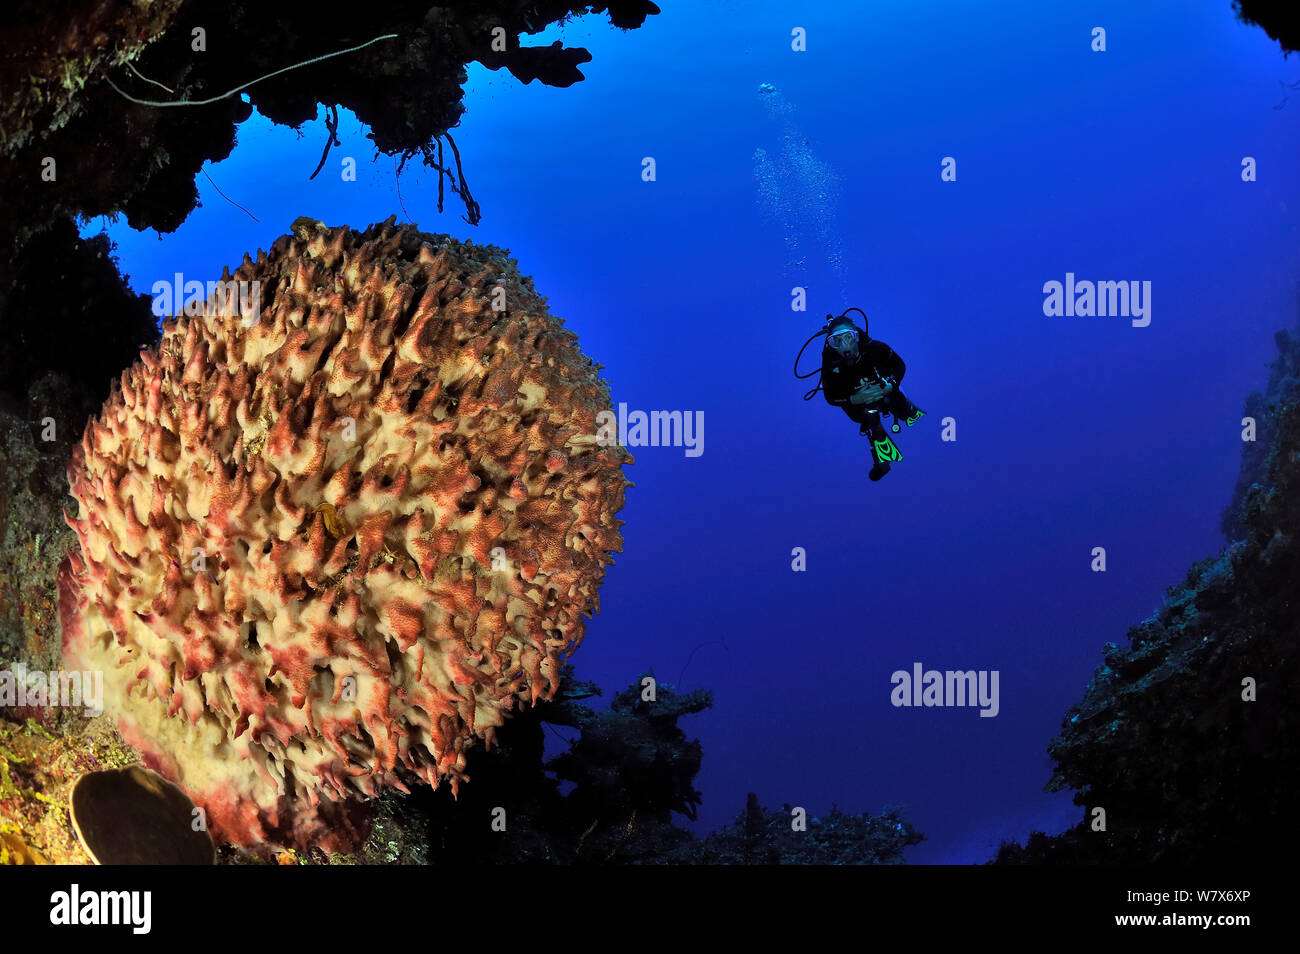 Diver near the coral drop off with a Giant barrel sponge (Xestospongia muta), San Salvador Island / Colombus Island, Bahamas. Caribbean. June 2013. Stock Photo